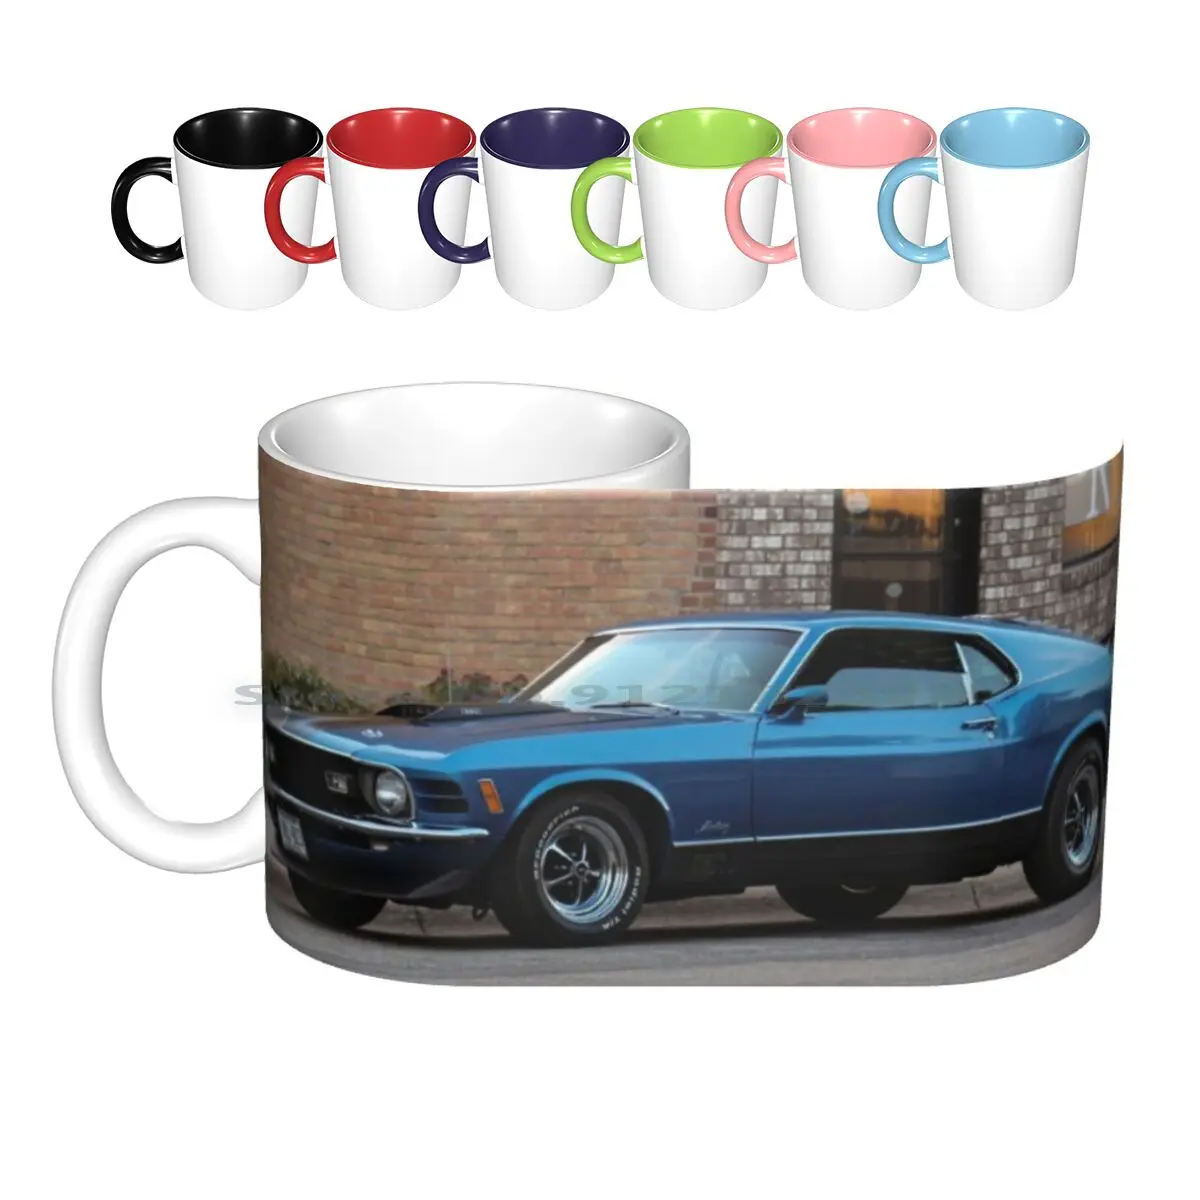 

1970 Mach 1 Ceramic Mugs Coffee Cups Milk Tea Mug 1970 Mach 1 Mach 1 1970 Blue Blue Blue Car Car Cars Classic Car 70s 60s Cars